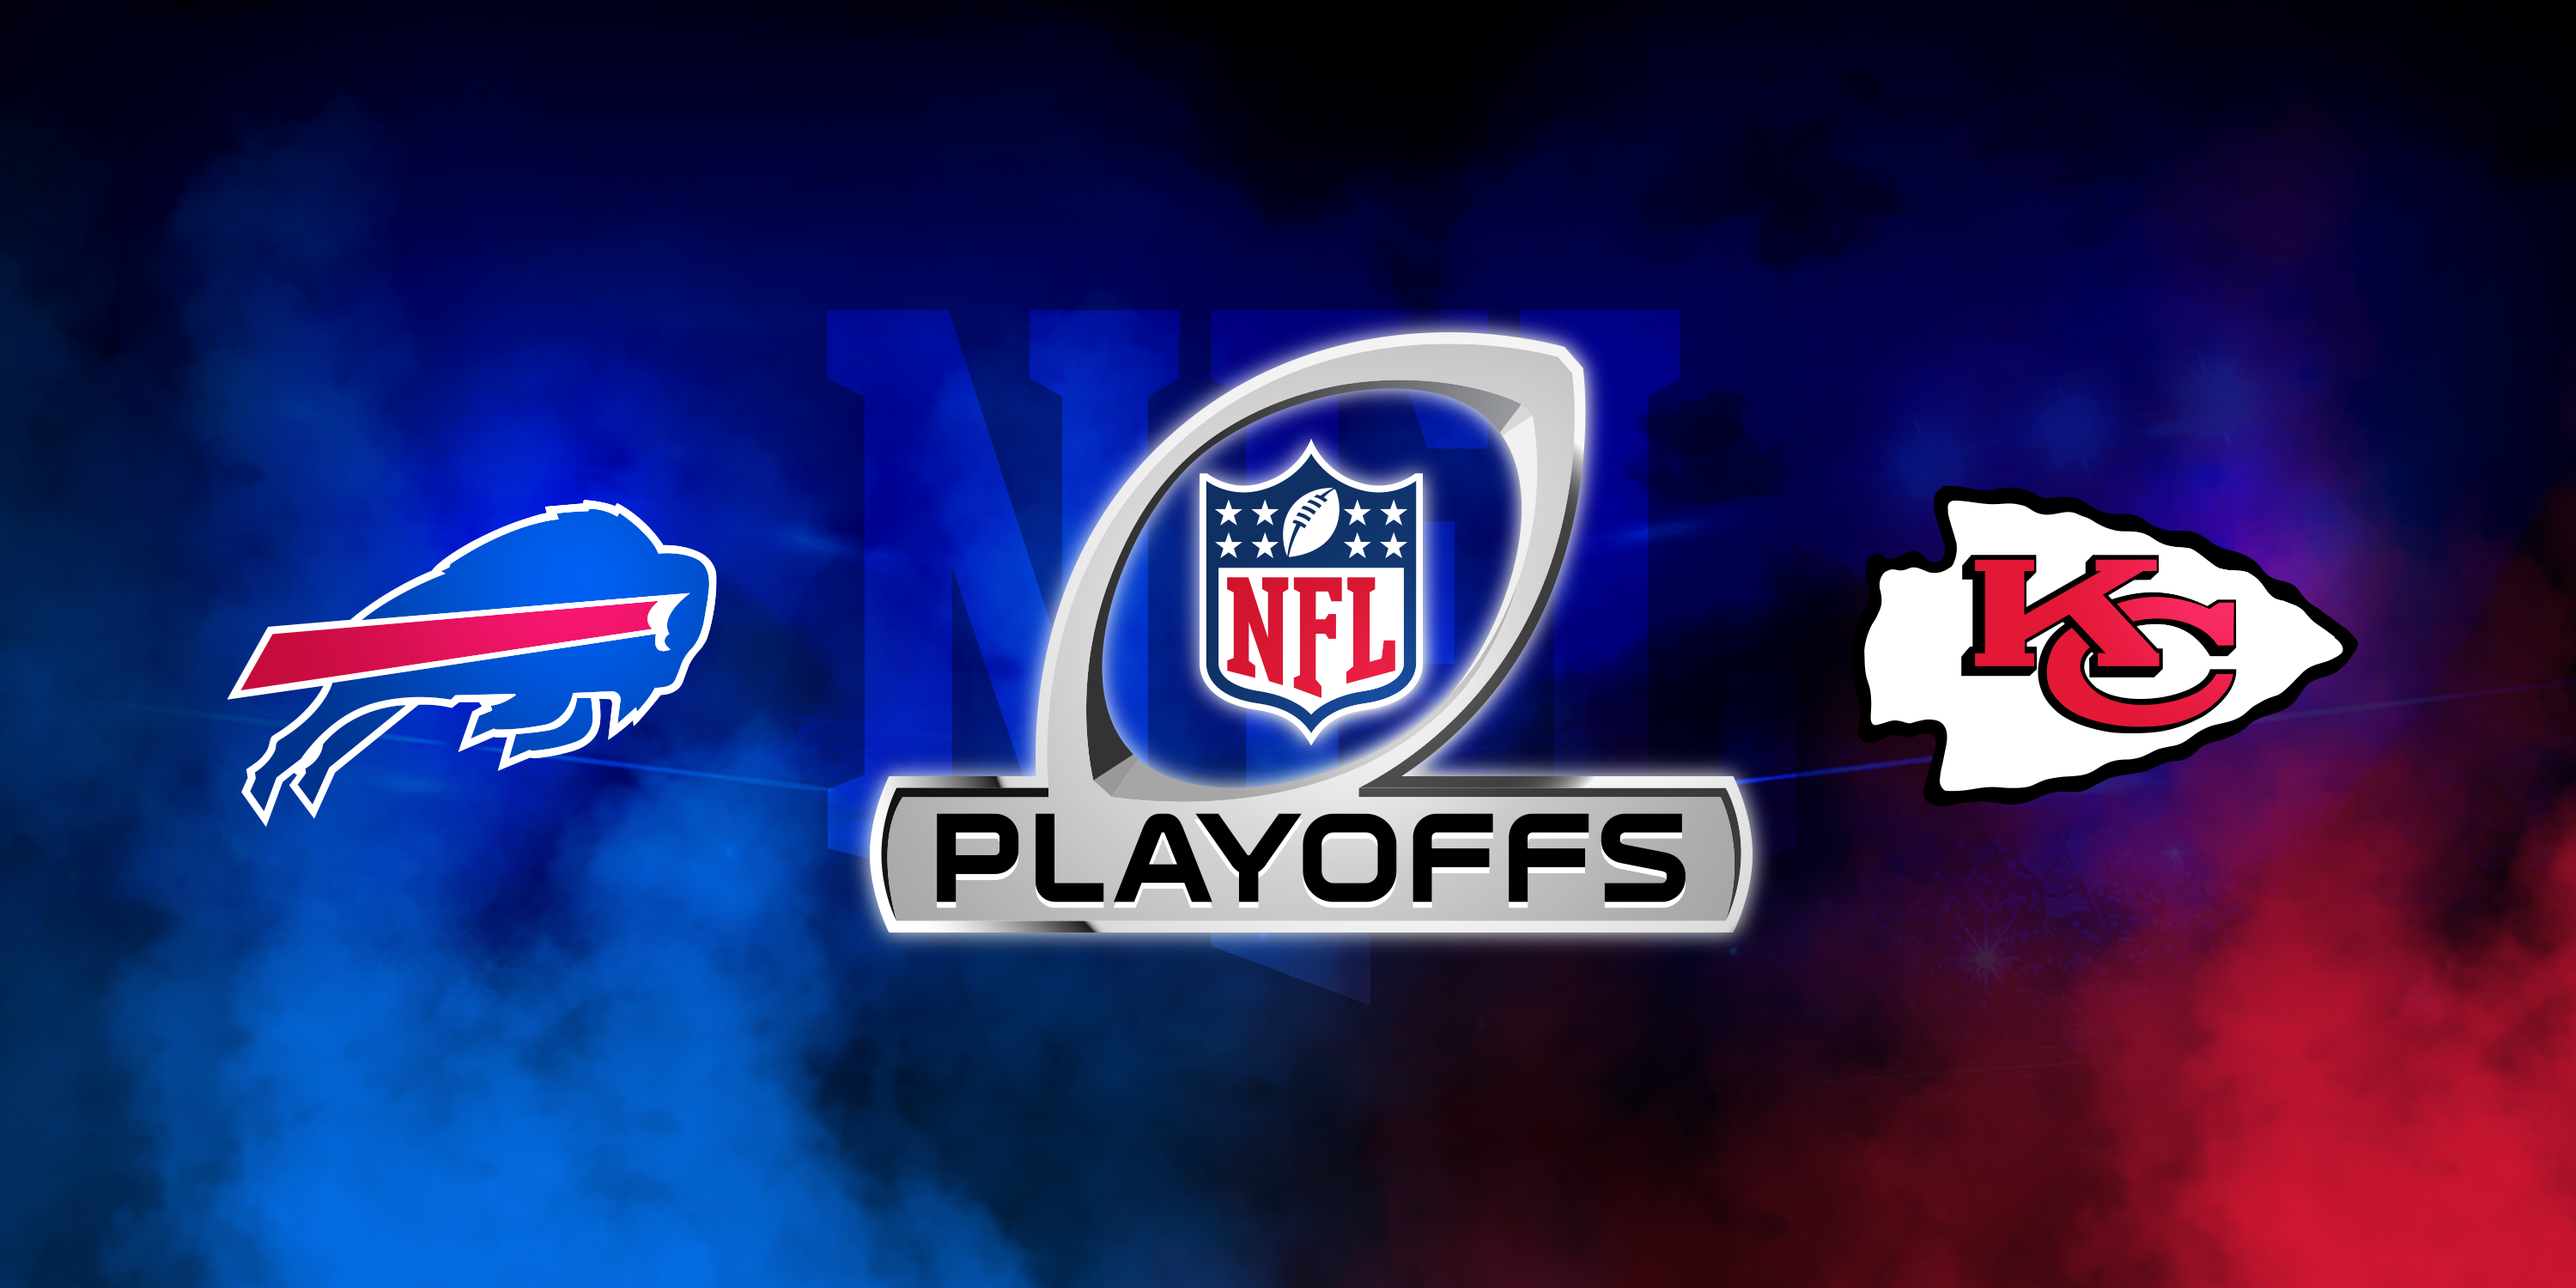 NFL Playoffs Buffalo Bills vs Kansas City Chiefs